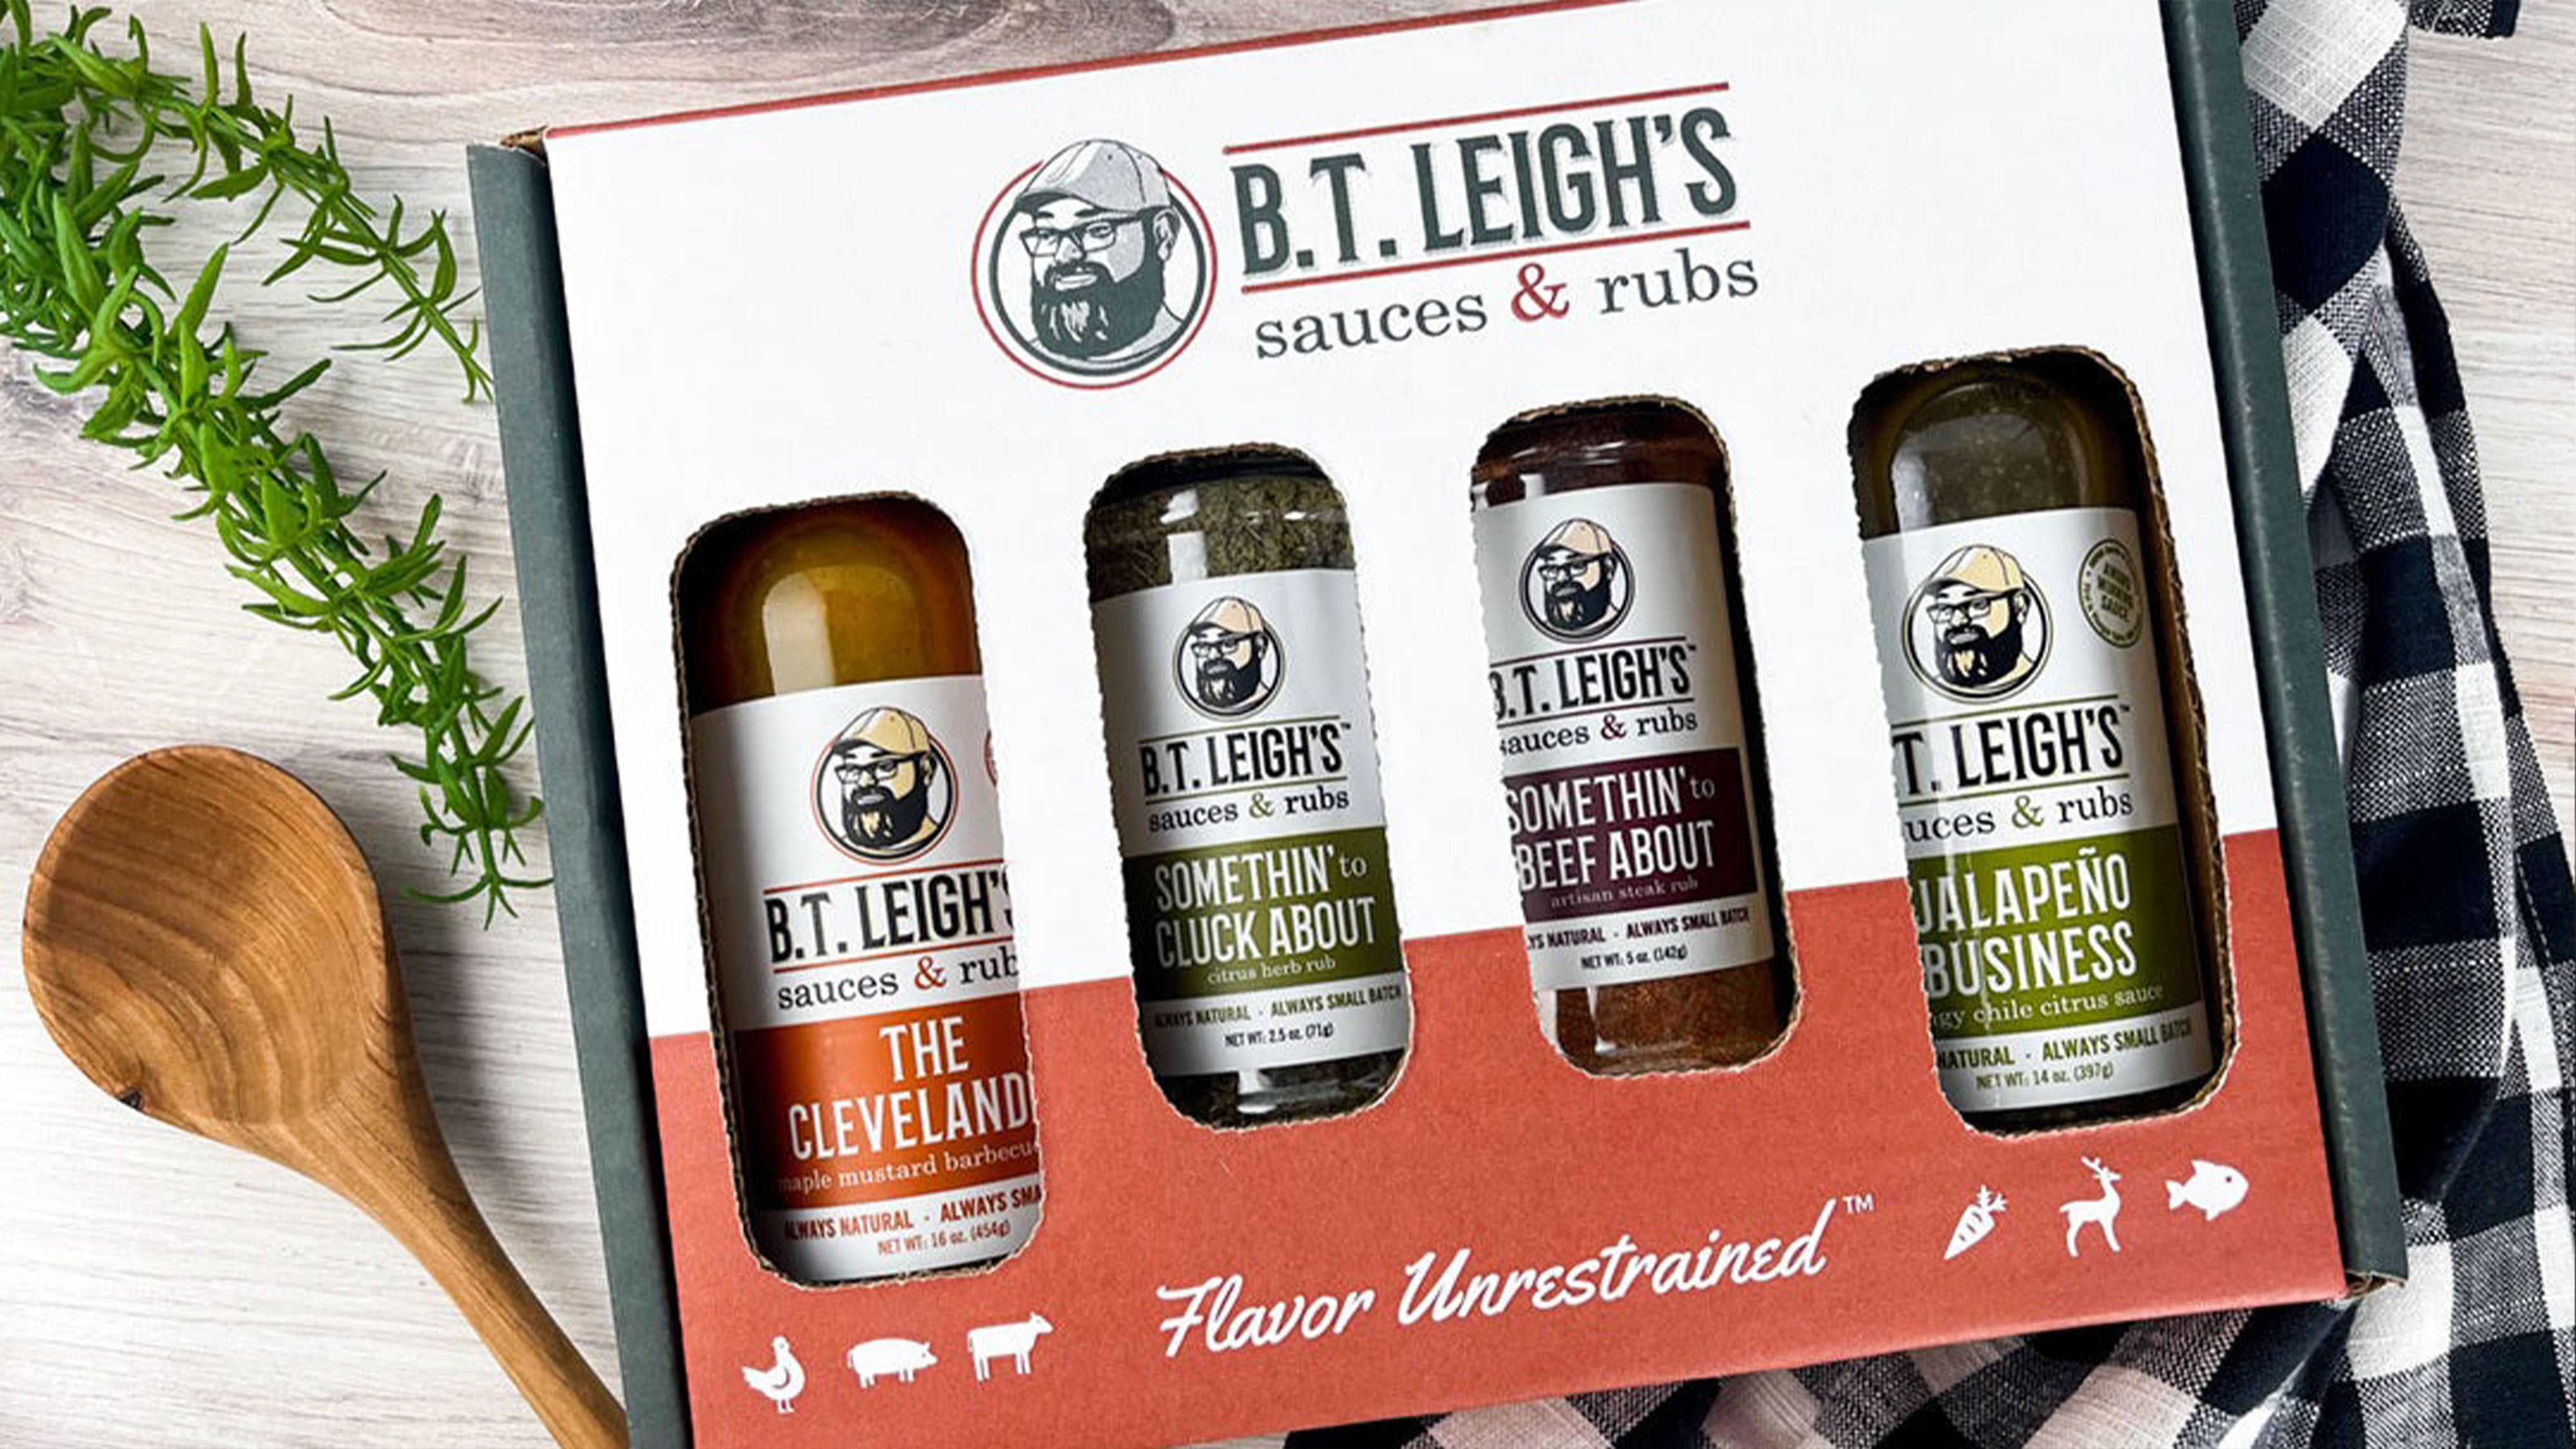 B.T. Leigh's Sauces & Rubs